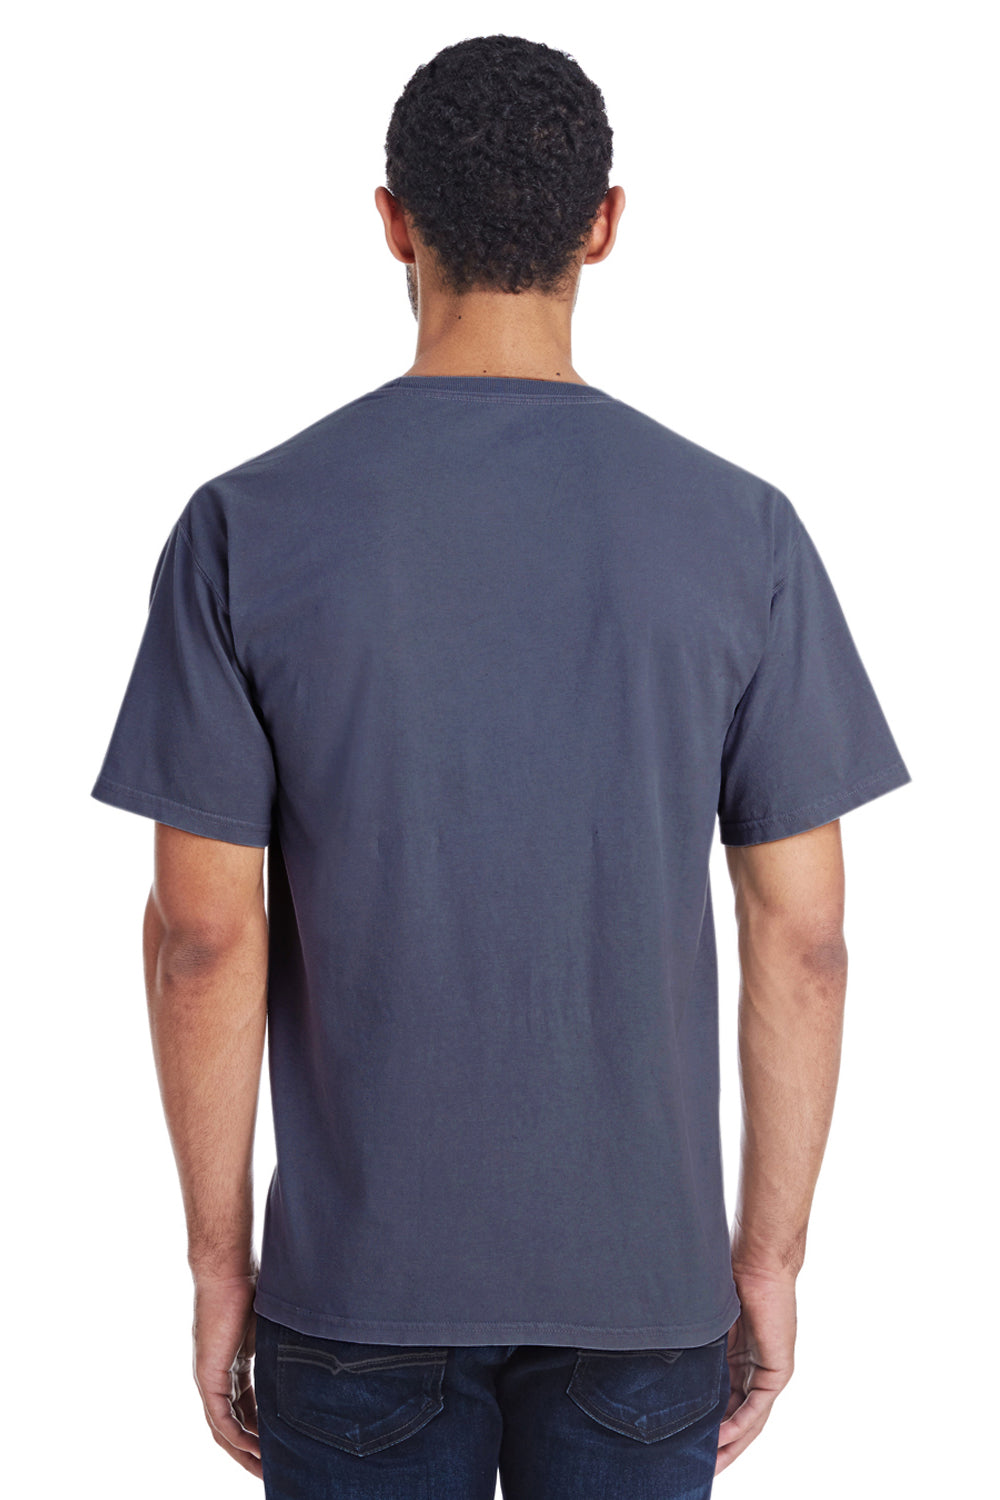 ComfortWash By Hanes GDH100 Mens Short Sleeve Crewneck T-Shirt Slate Blue Back